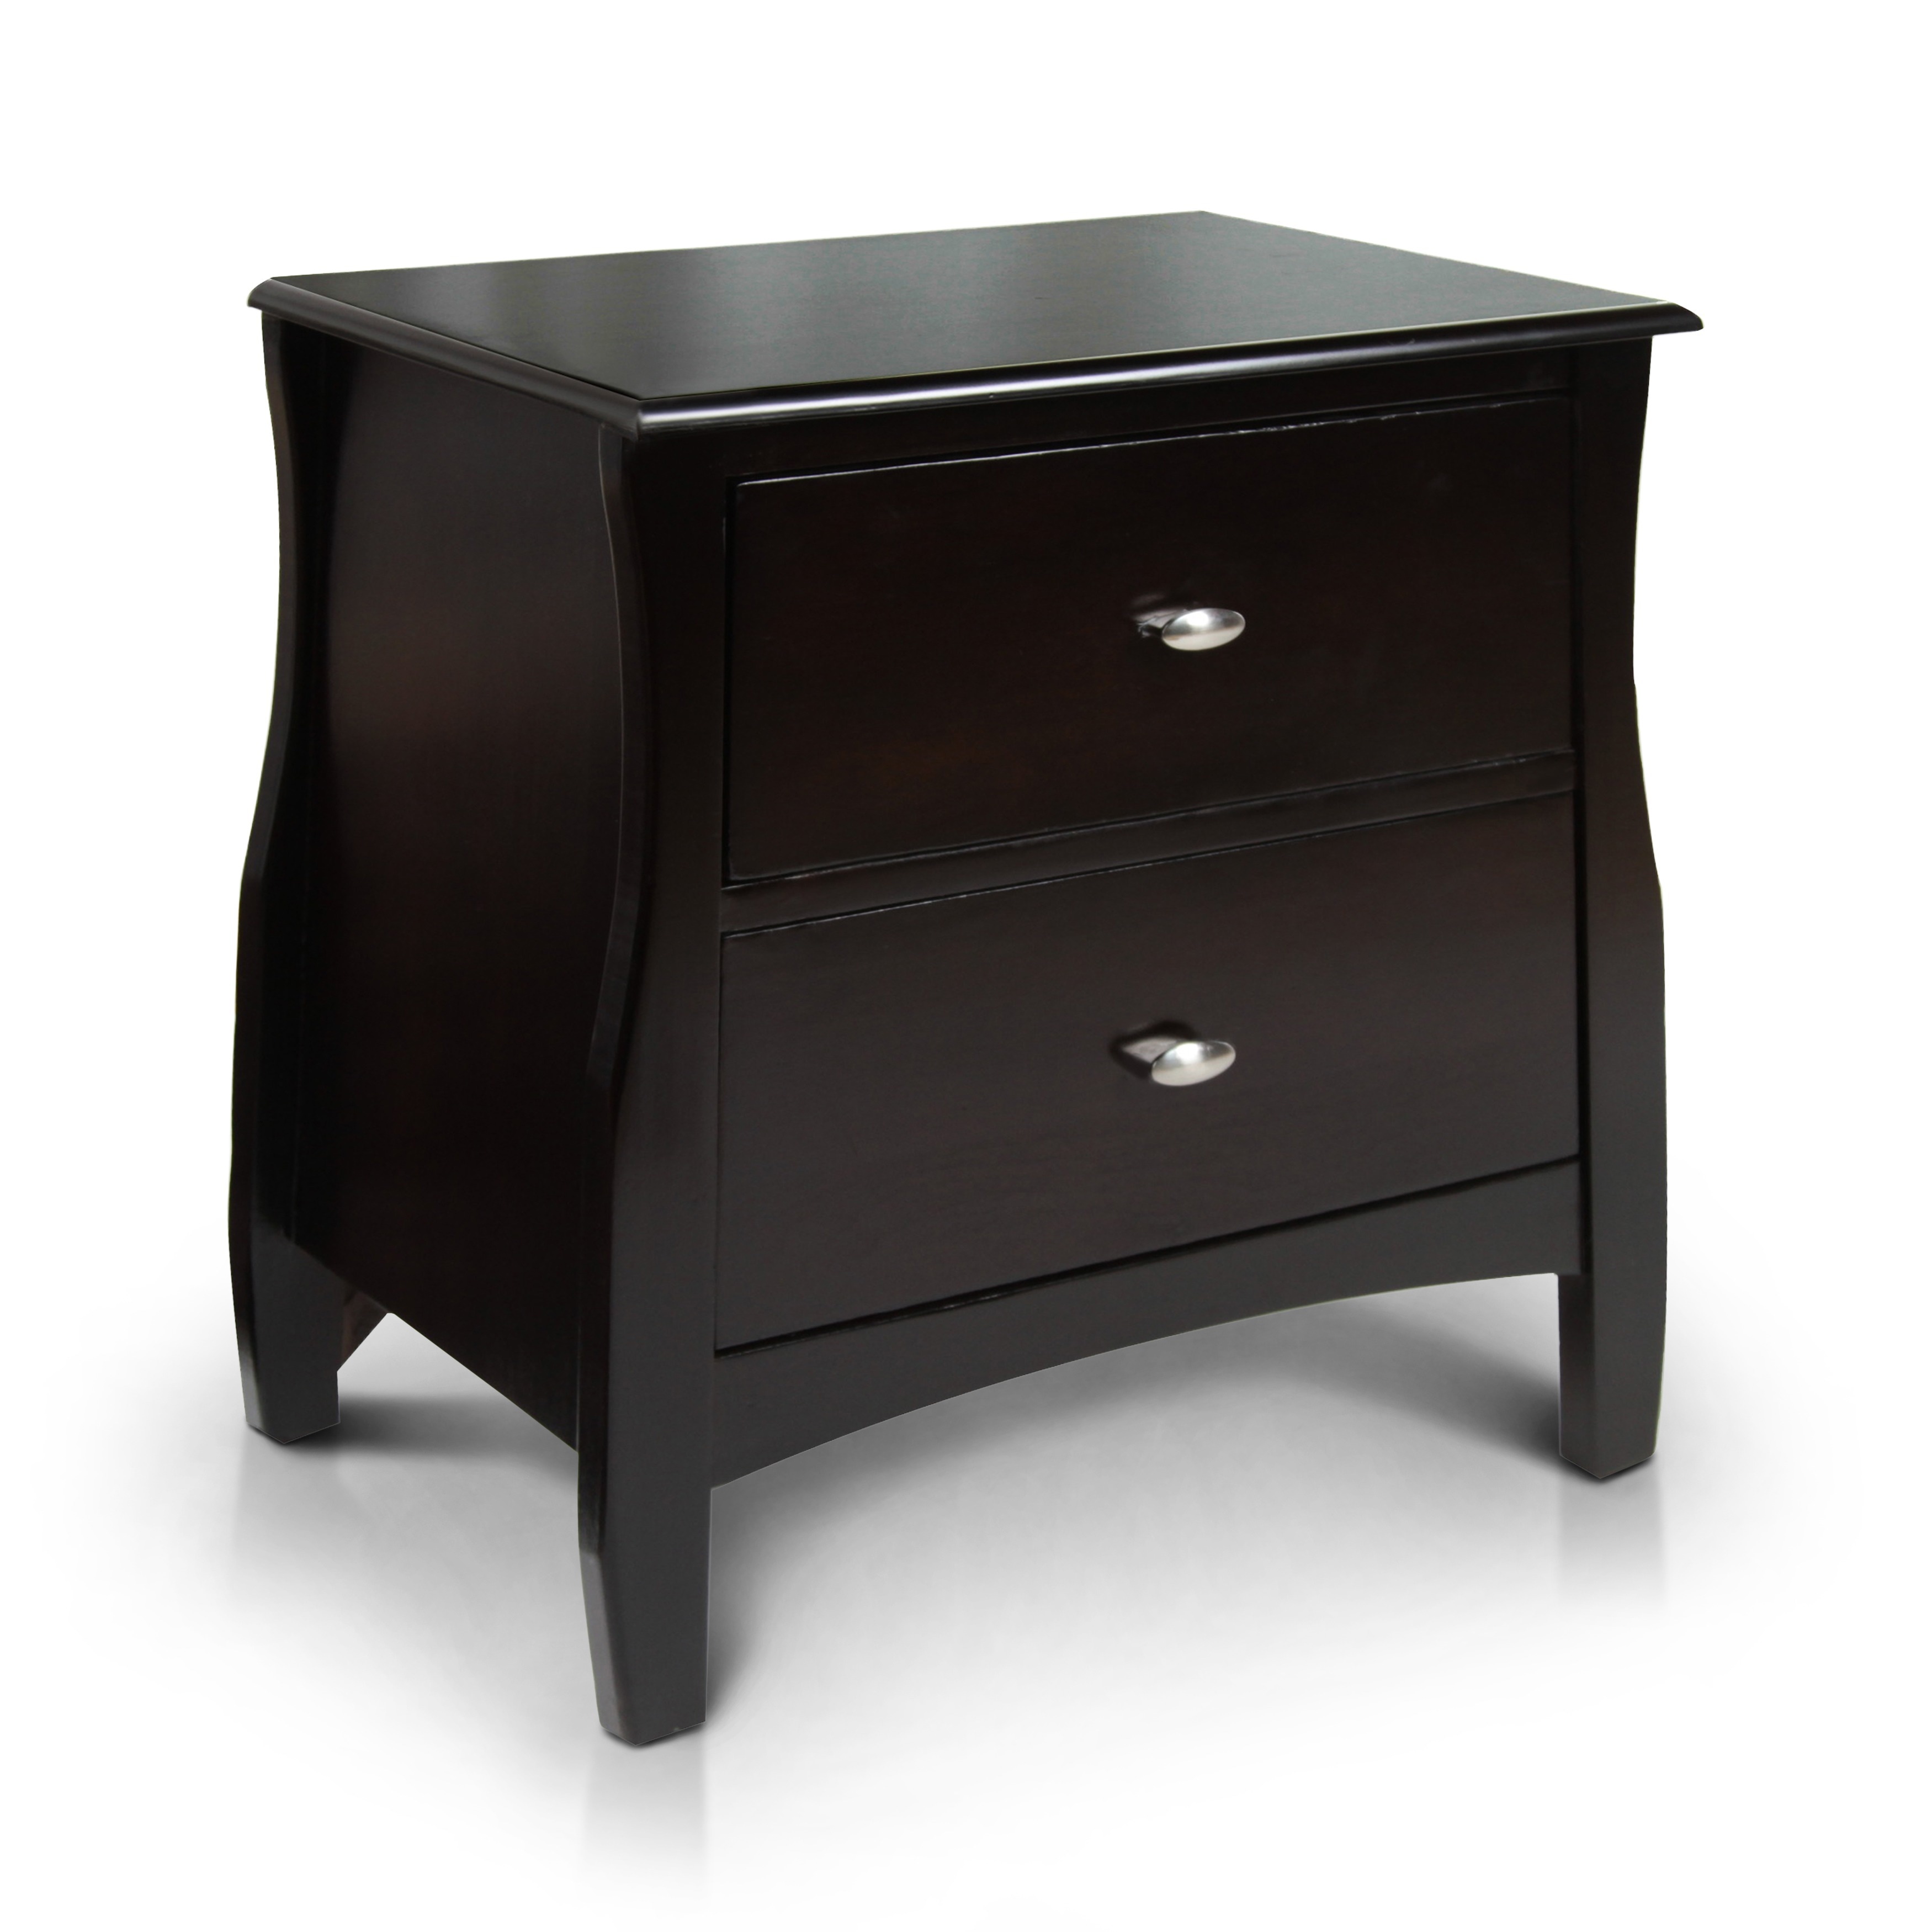 Furniture Of America Furniture Of America Beau Espresso Finish 2 drawer Nightstand Brown Size 2 drawer